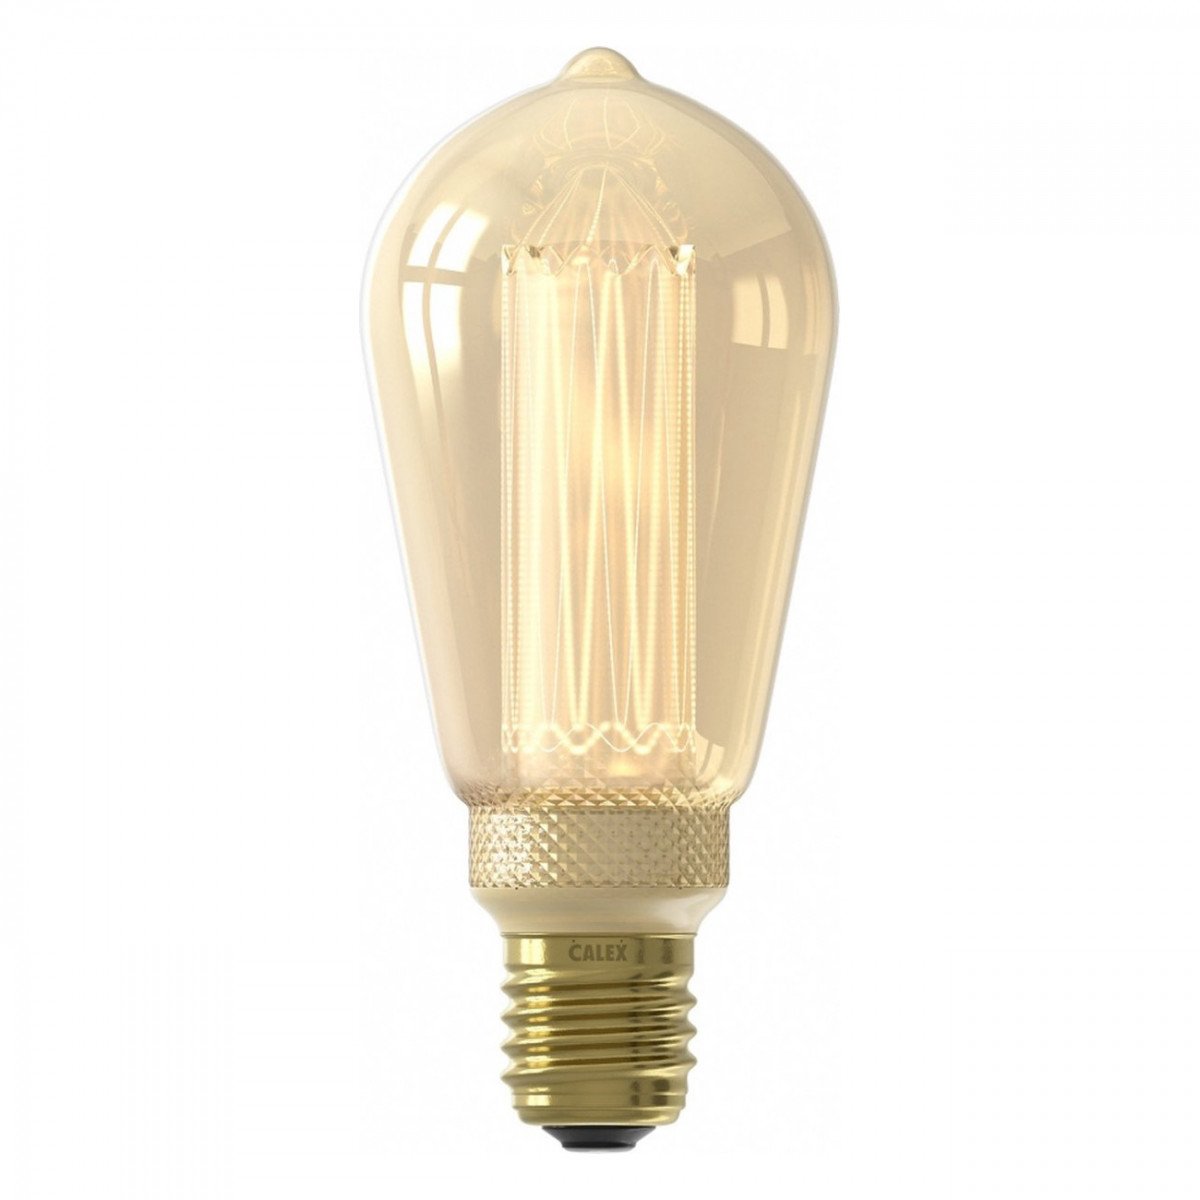 Source lumineuse Calex LED 3.5 watt E27 socket éclairage d'ambiance moderne